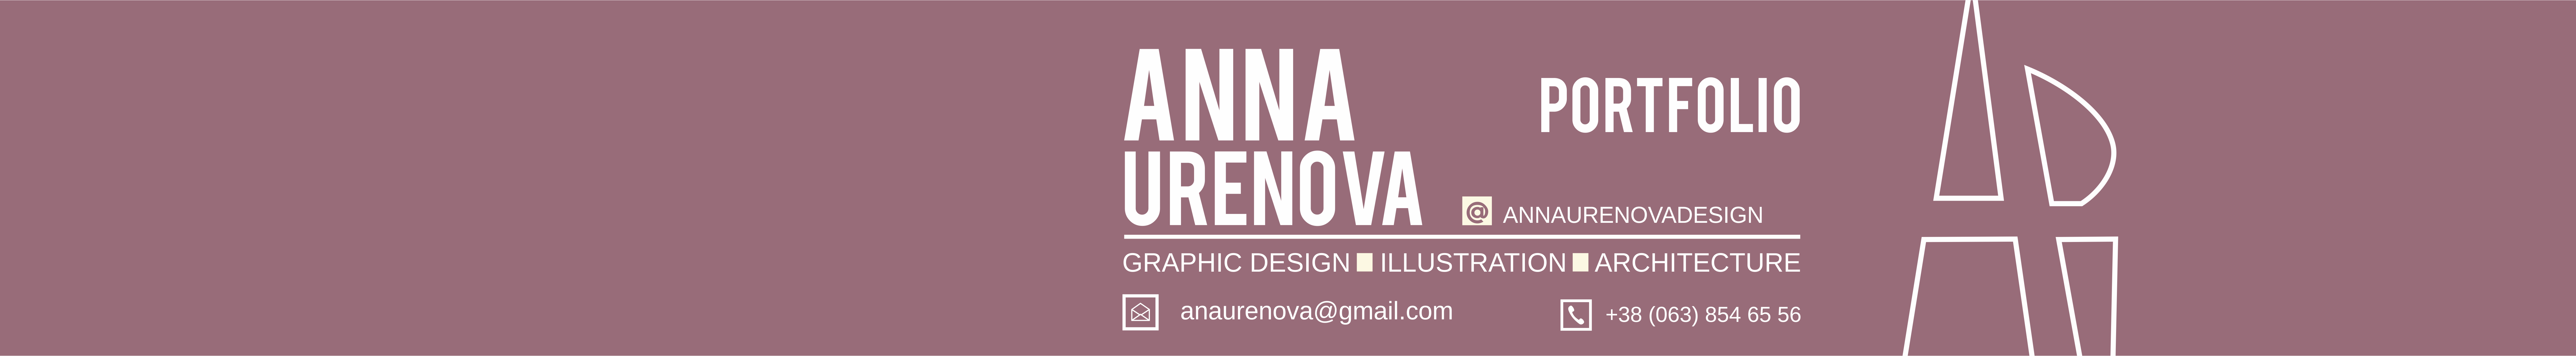 Anna Ureñova 的个人资料横幅